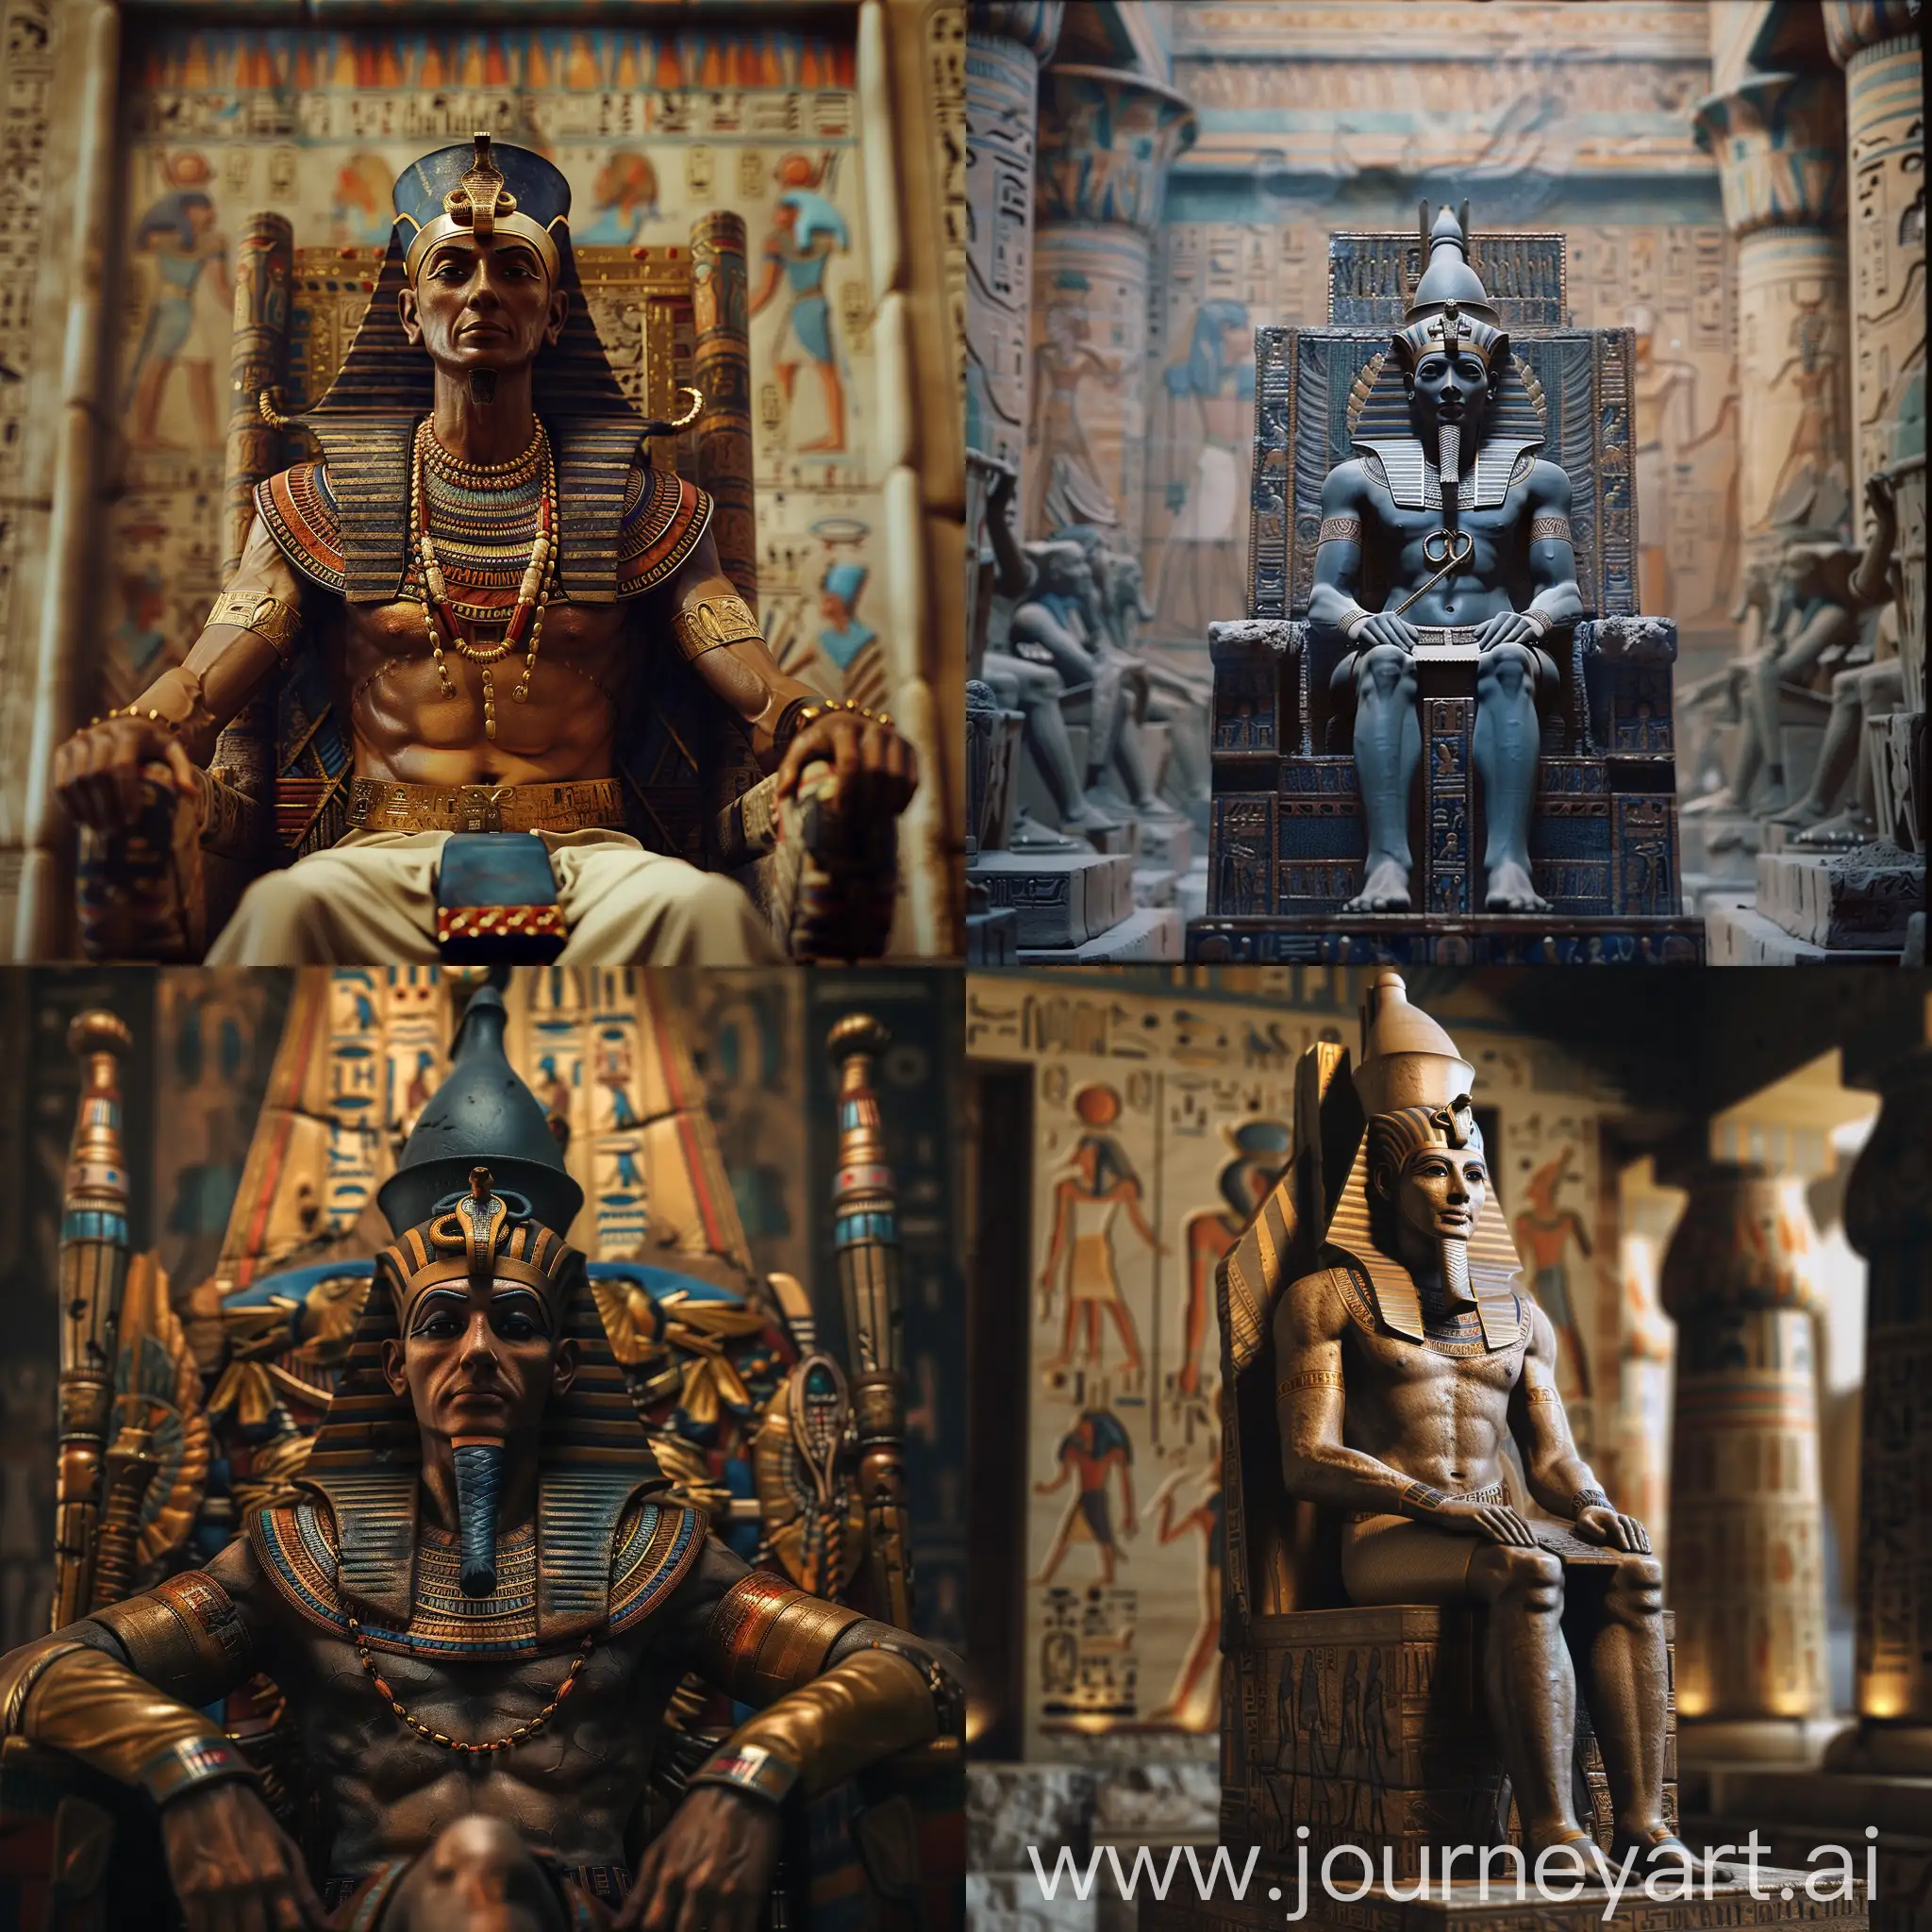 Realistic-Portrait-of-Pharaoh-Ramesses-II-on-Throne-Cinematic-Lighting-8mm-Photograph